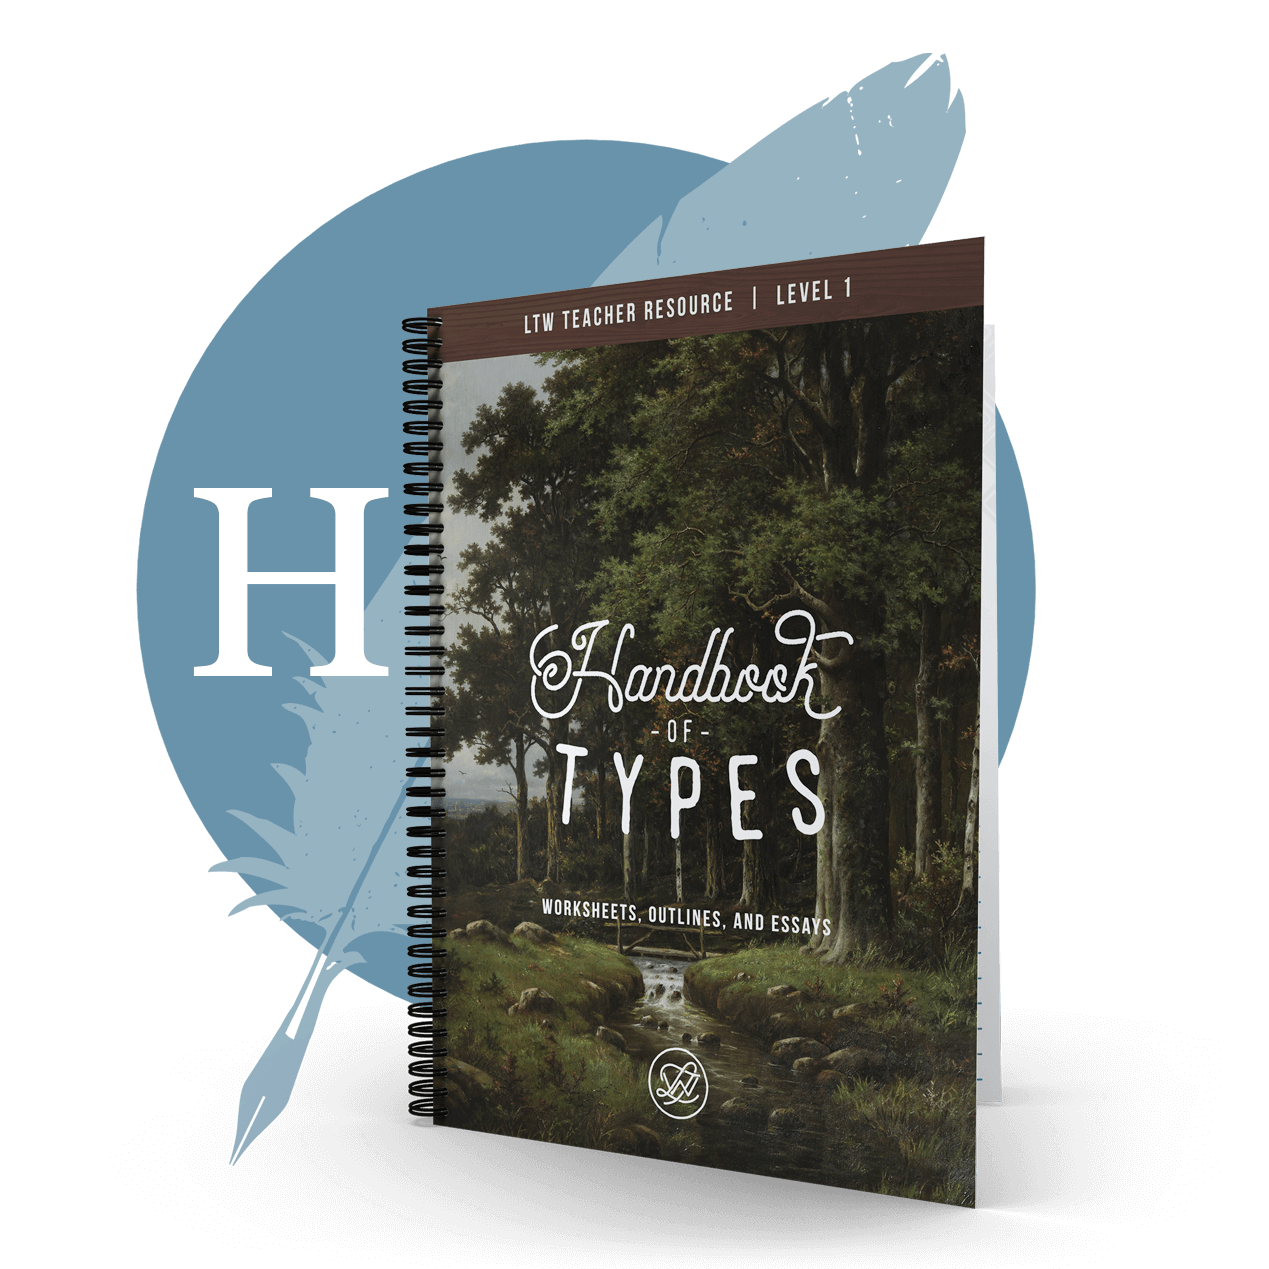 LTW Handbook of Types